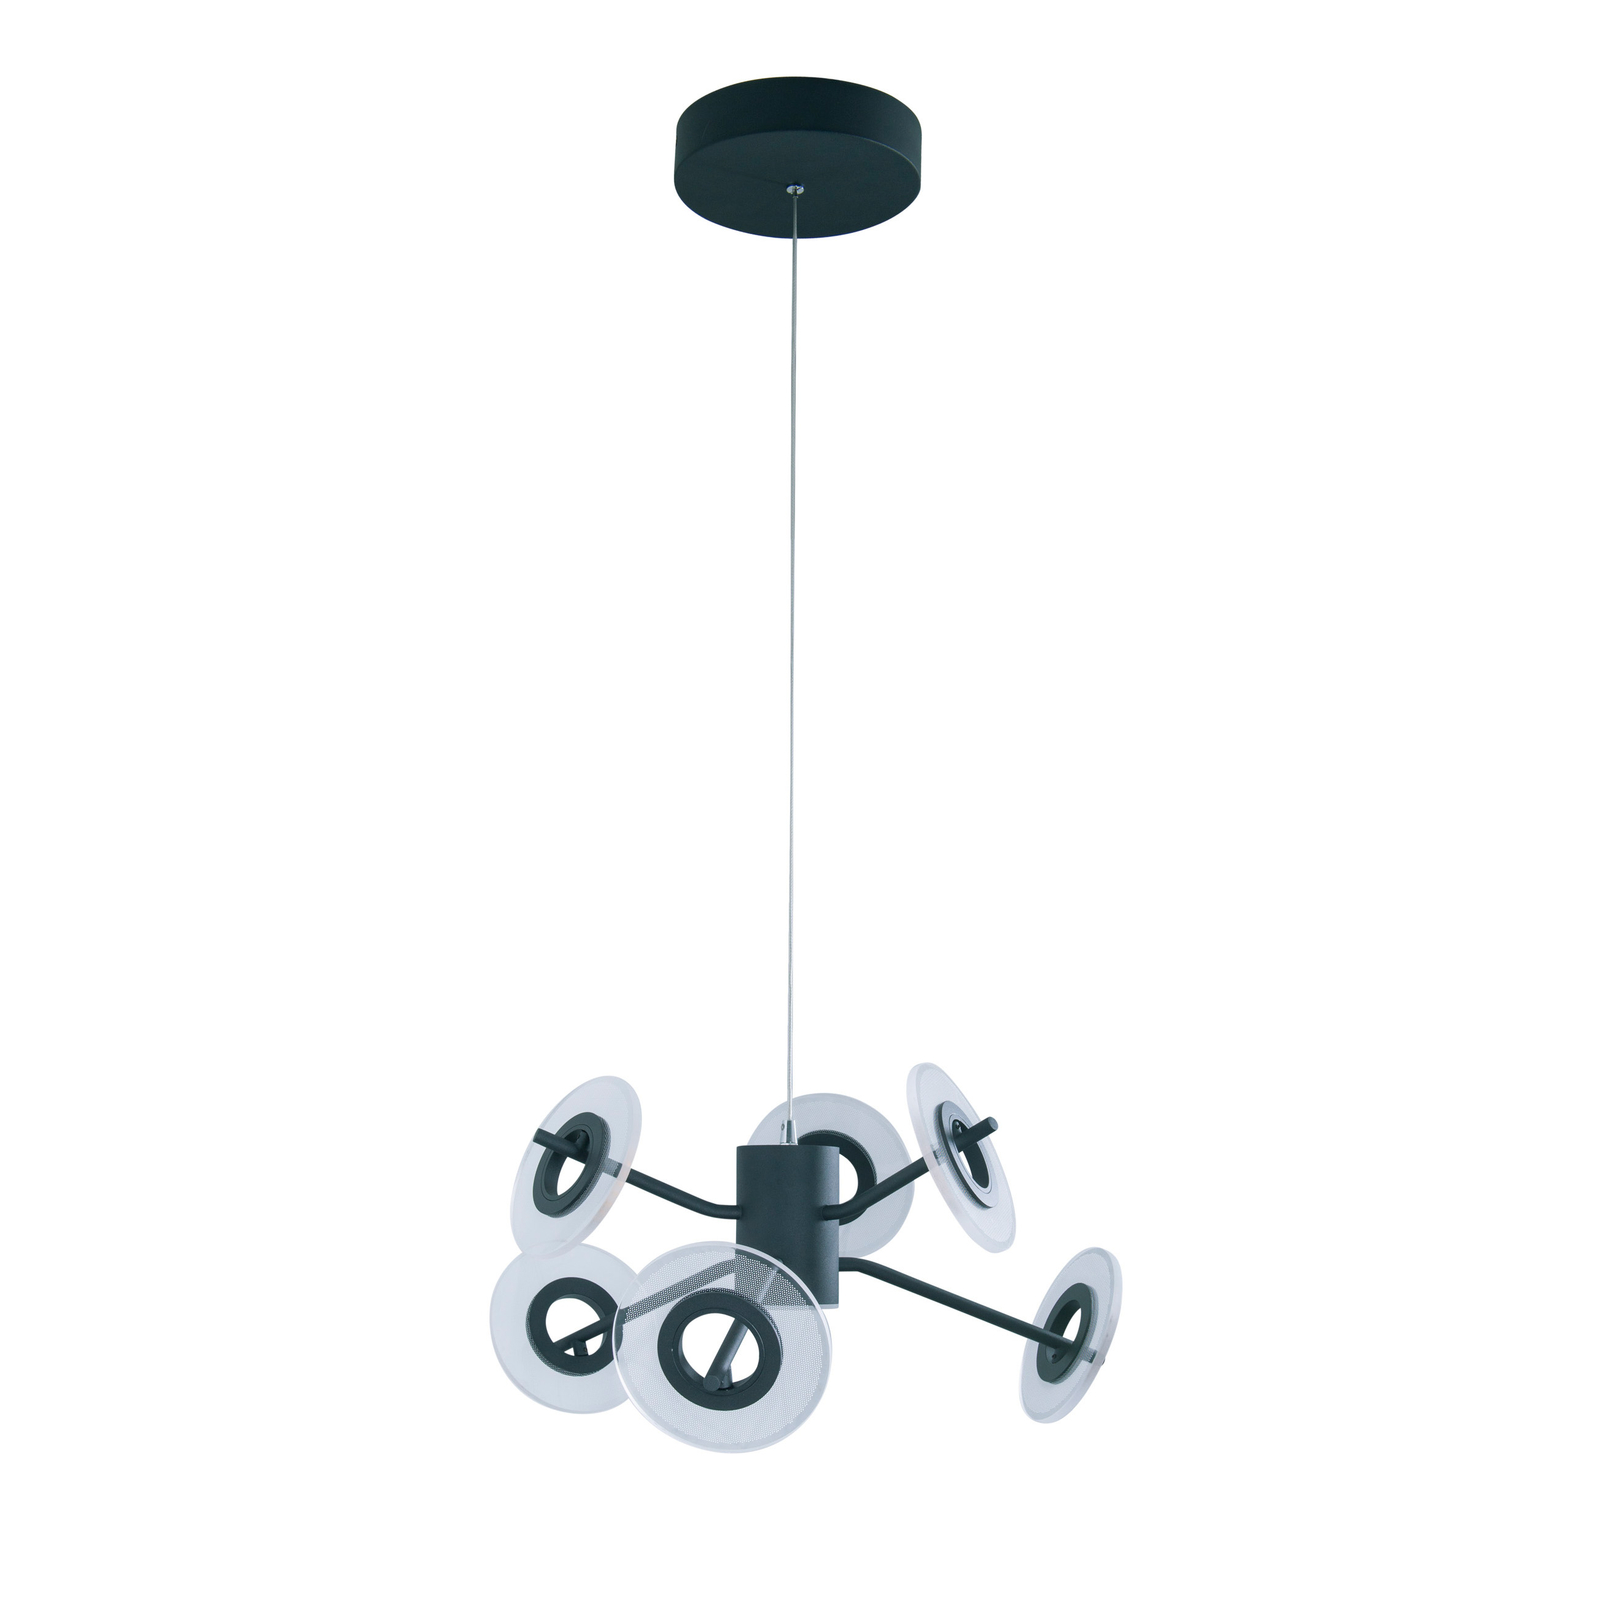 Discus LED pendant light in black, six-bulb